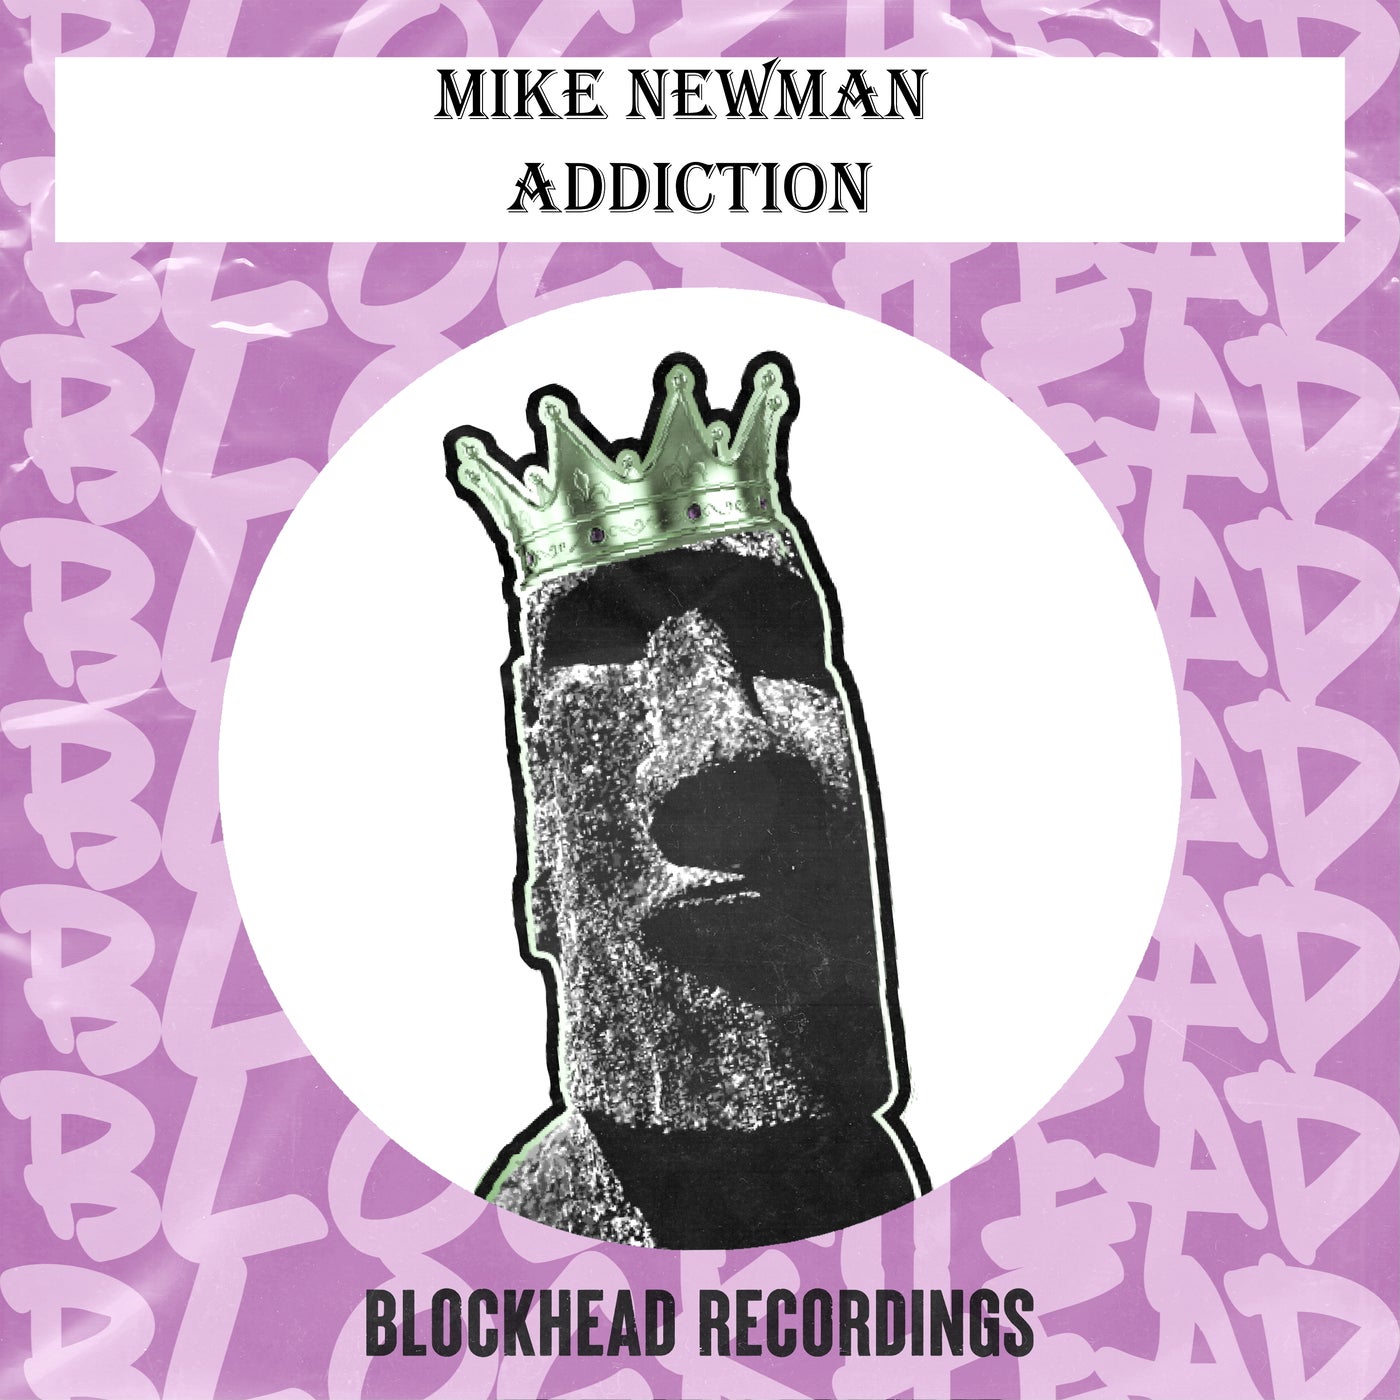 Mike Newman - Addiction on Blockhead Recordings